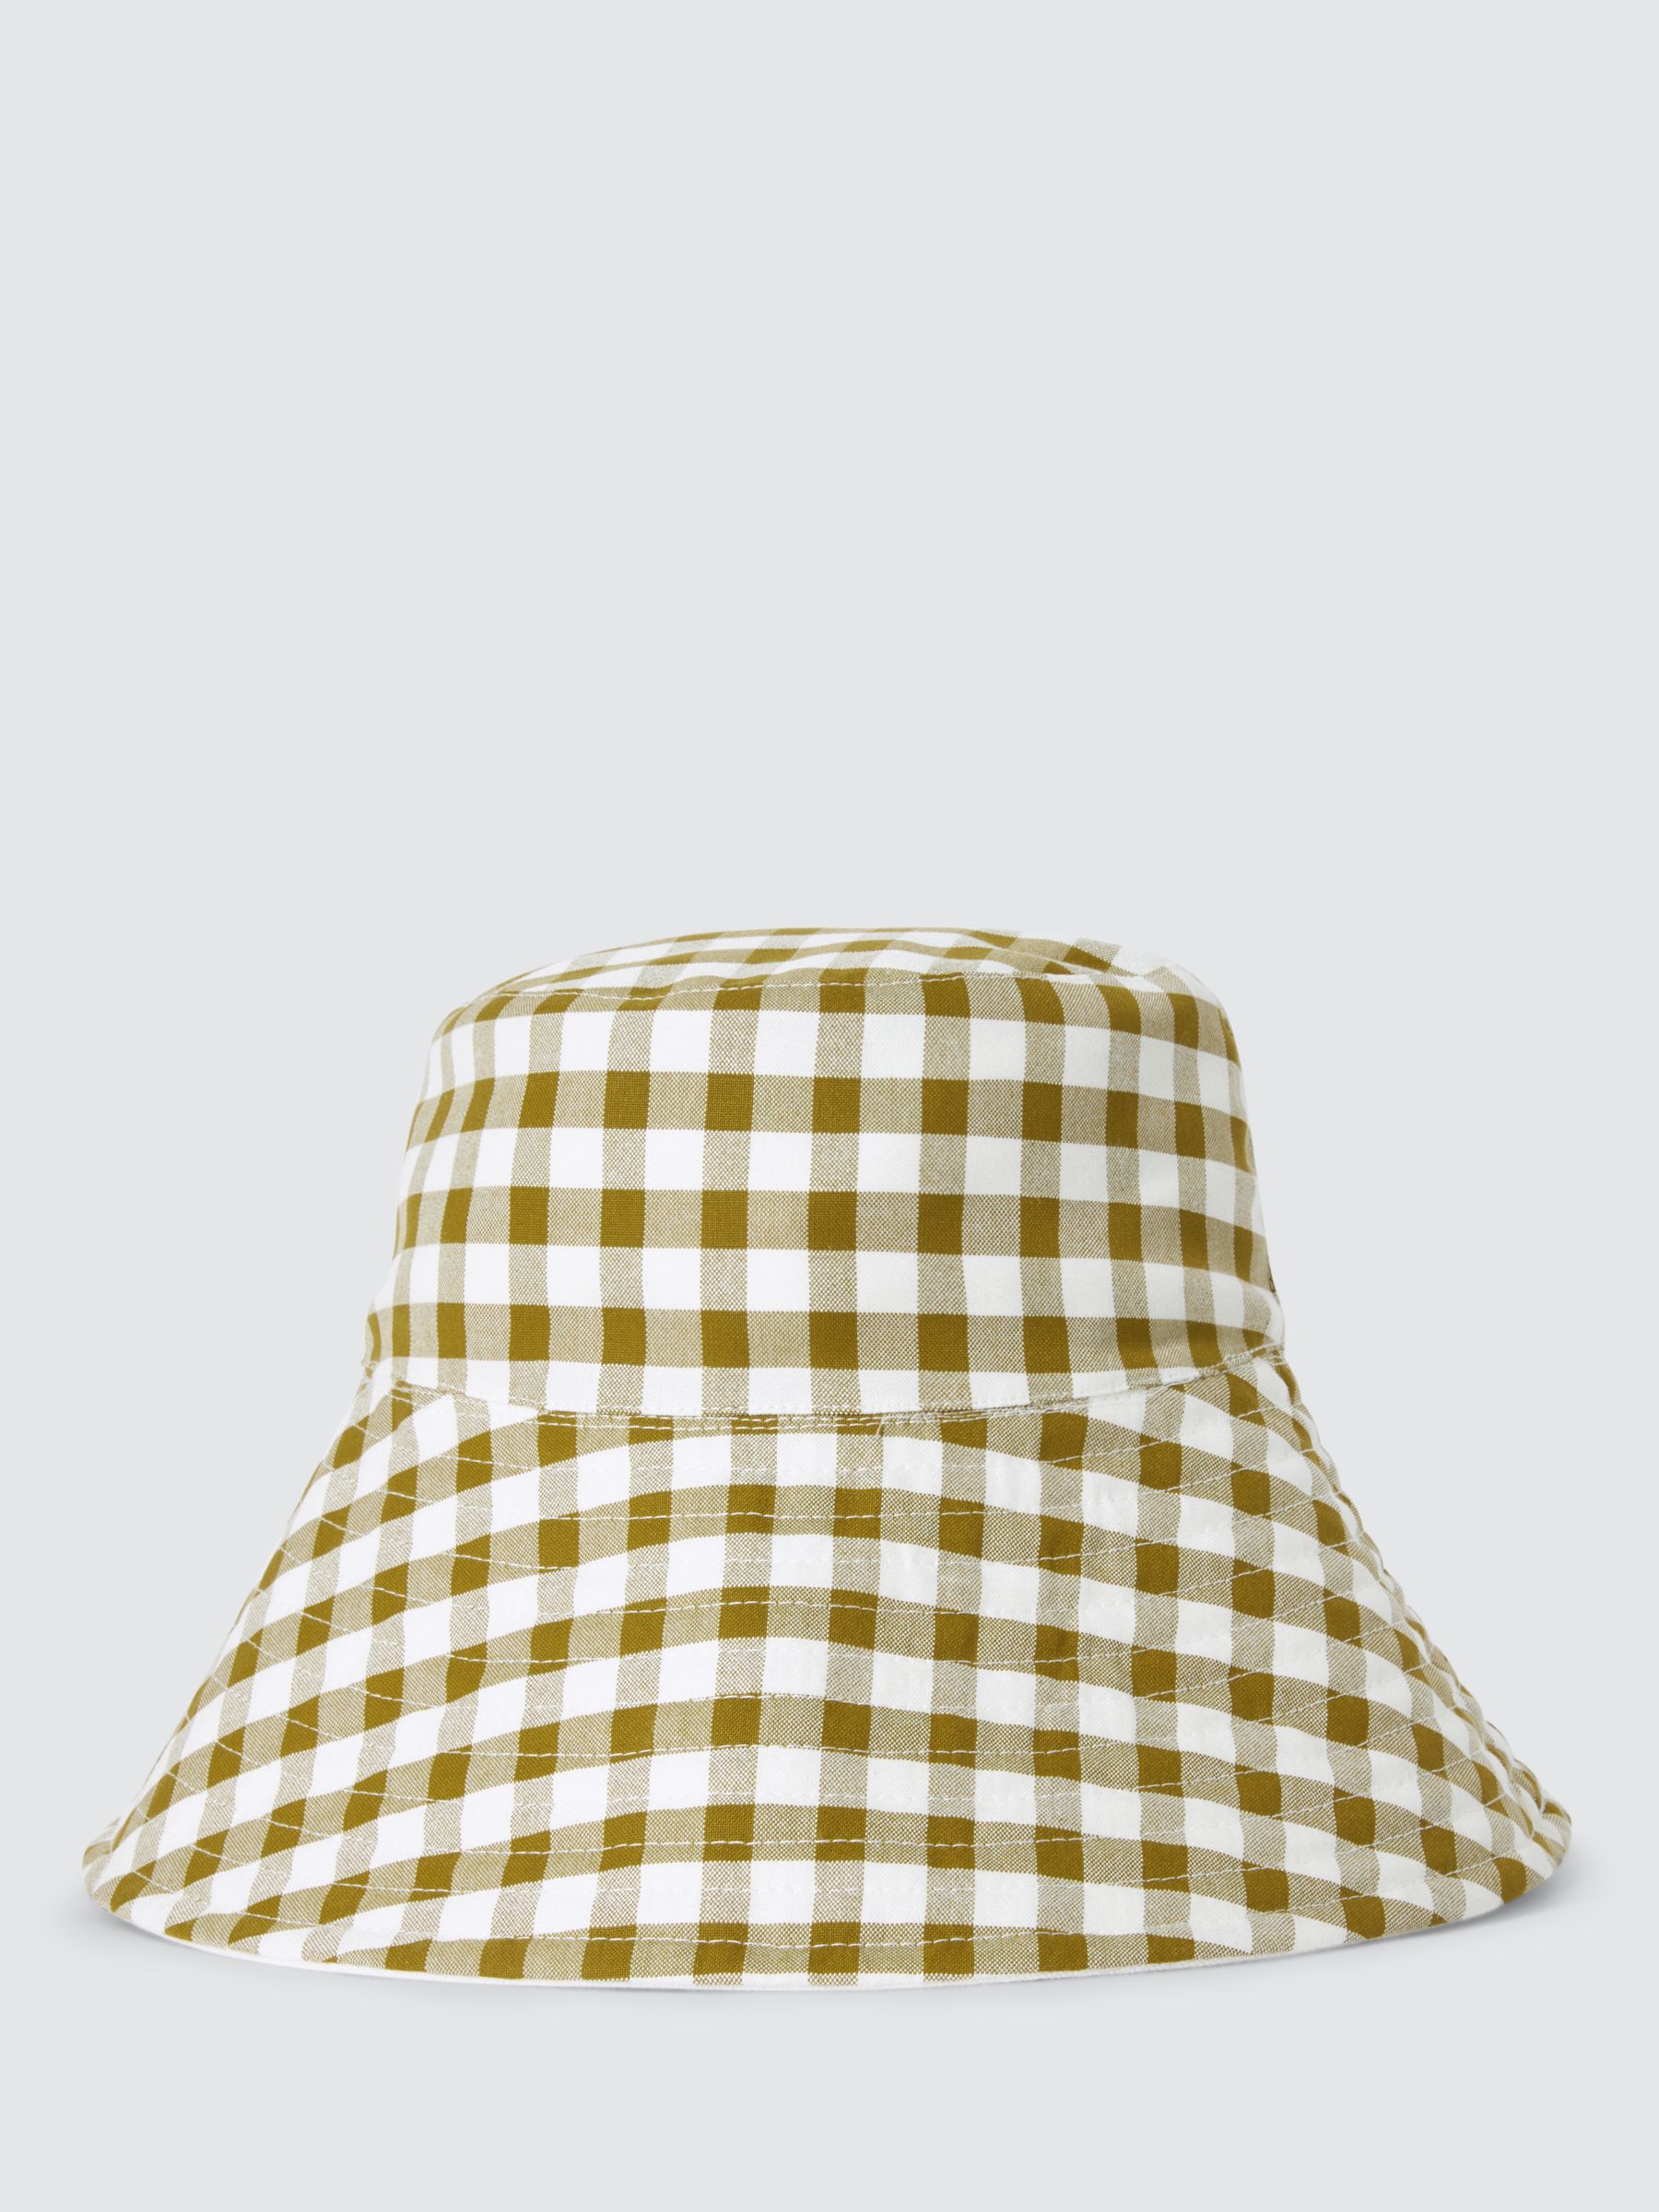 Buy John Lewis Gingham Cotton Reversible Bucket Hat Online at johnlewis.com